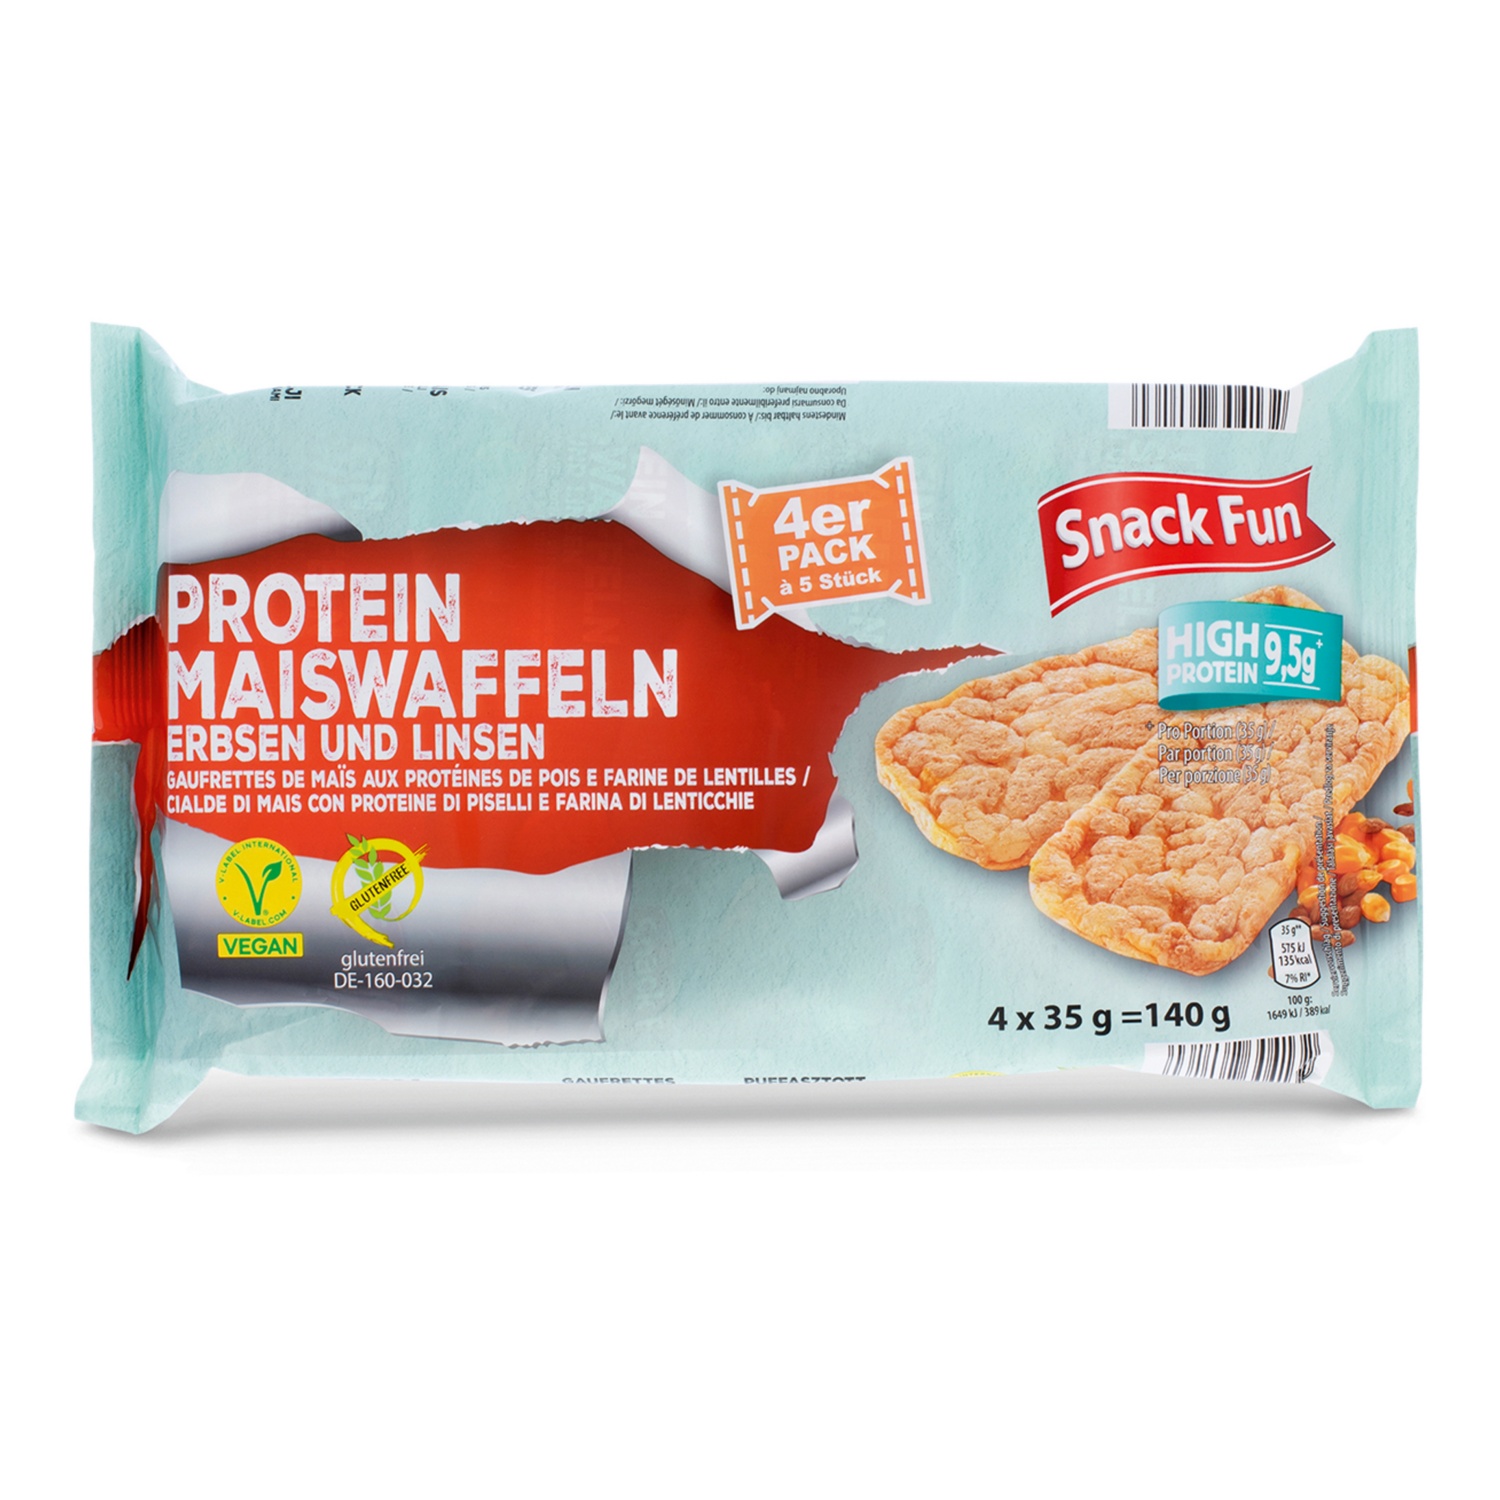 SNACK FUN Protein Reis-/Maiswaffeln, Linsen